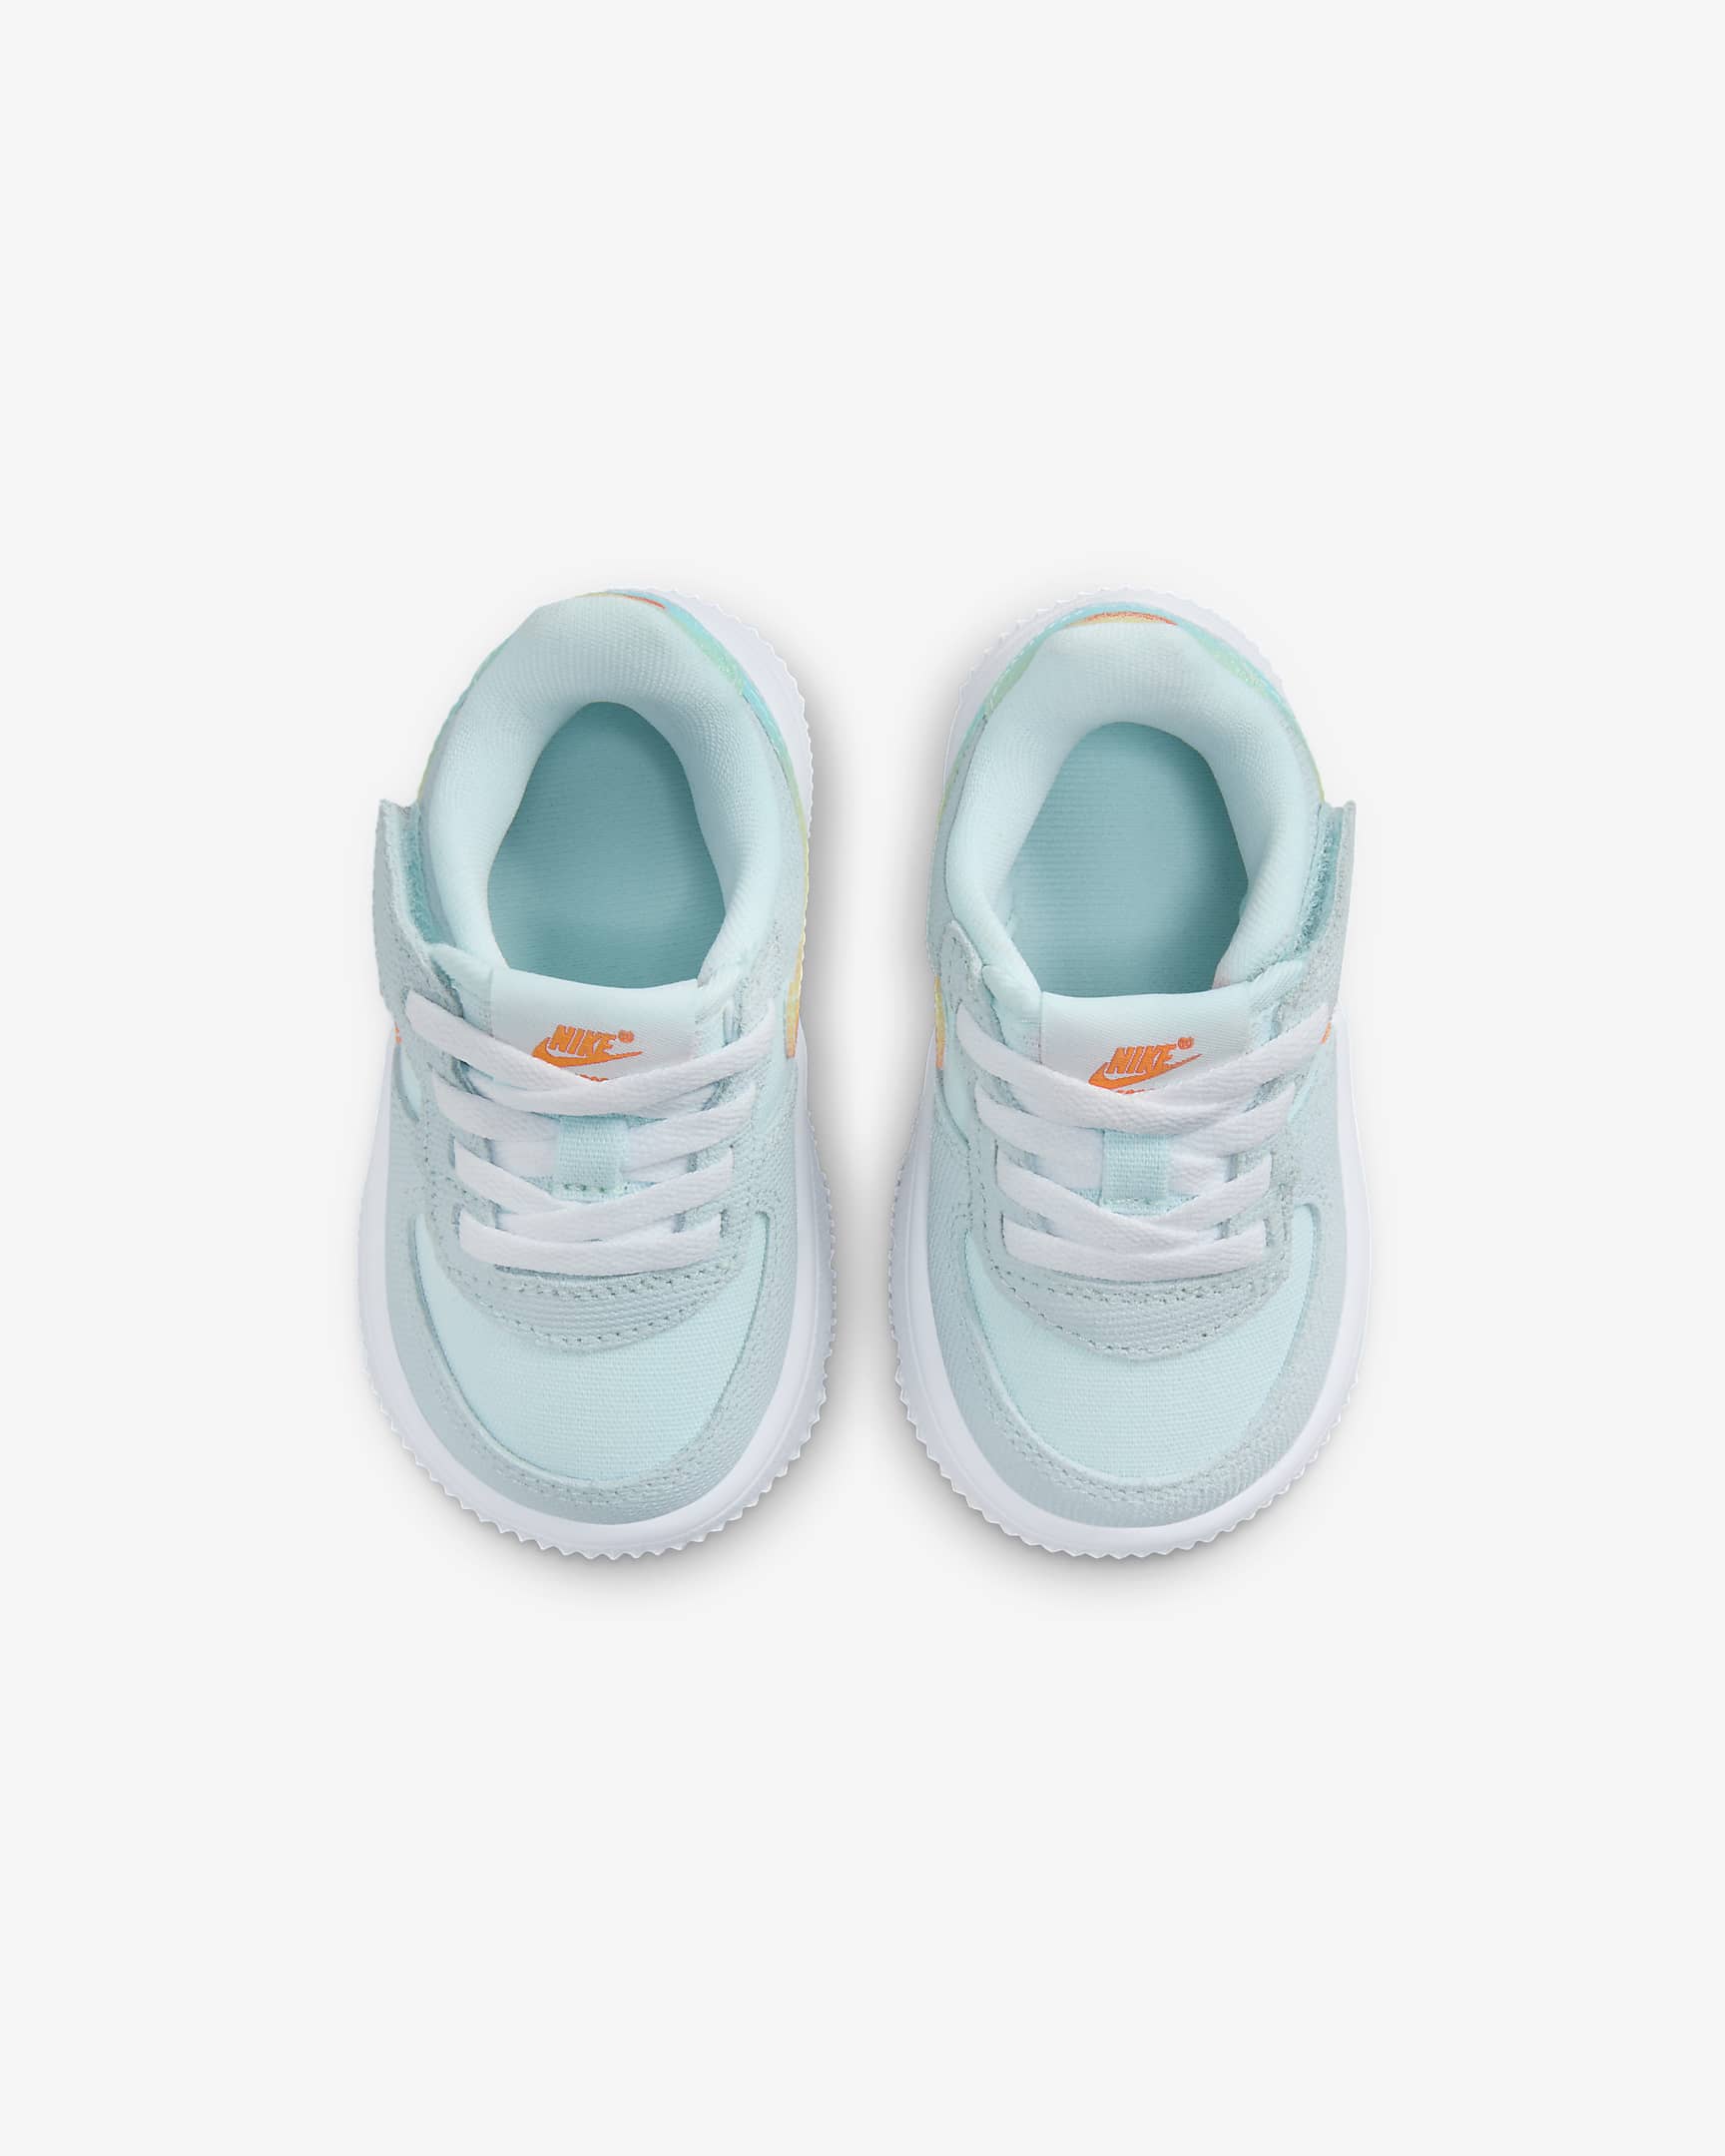 Nike Force 1 Low EasyOn Baby/Toddler Shoes - Glacier Blue/Light Lemon Twist/Aquarius Blue/Total Orange